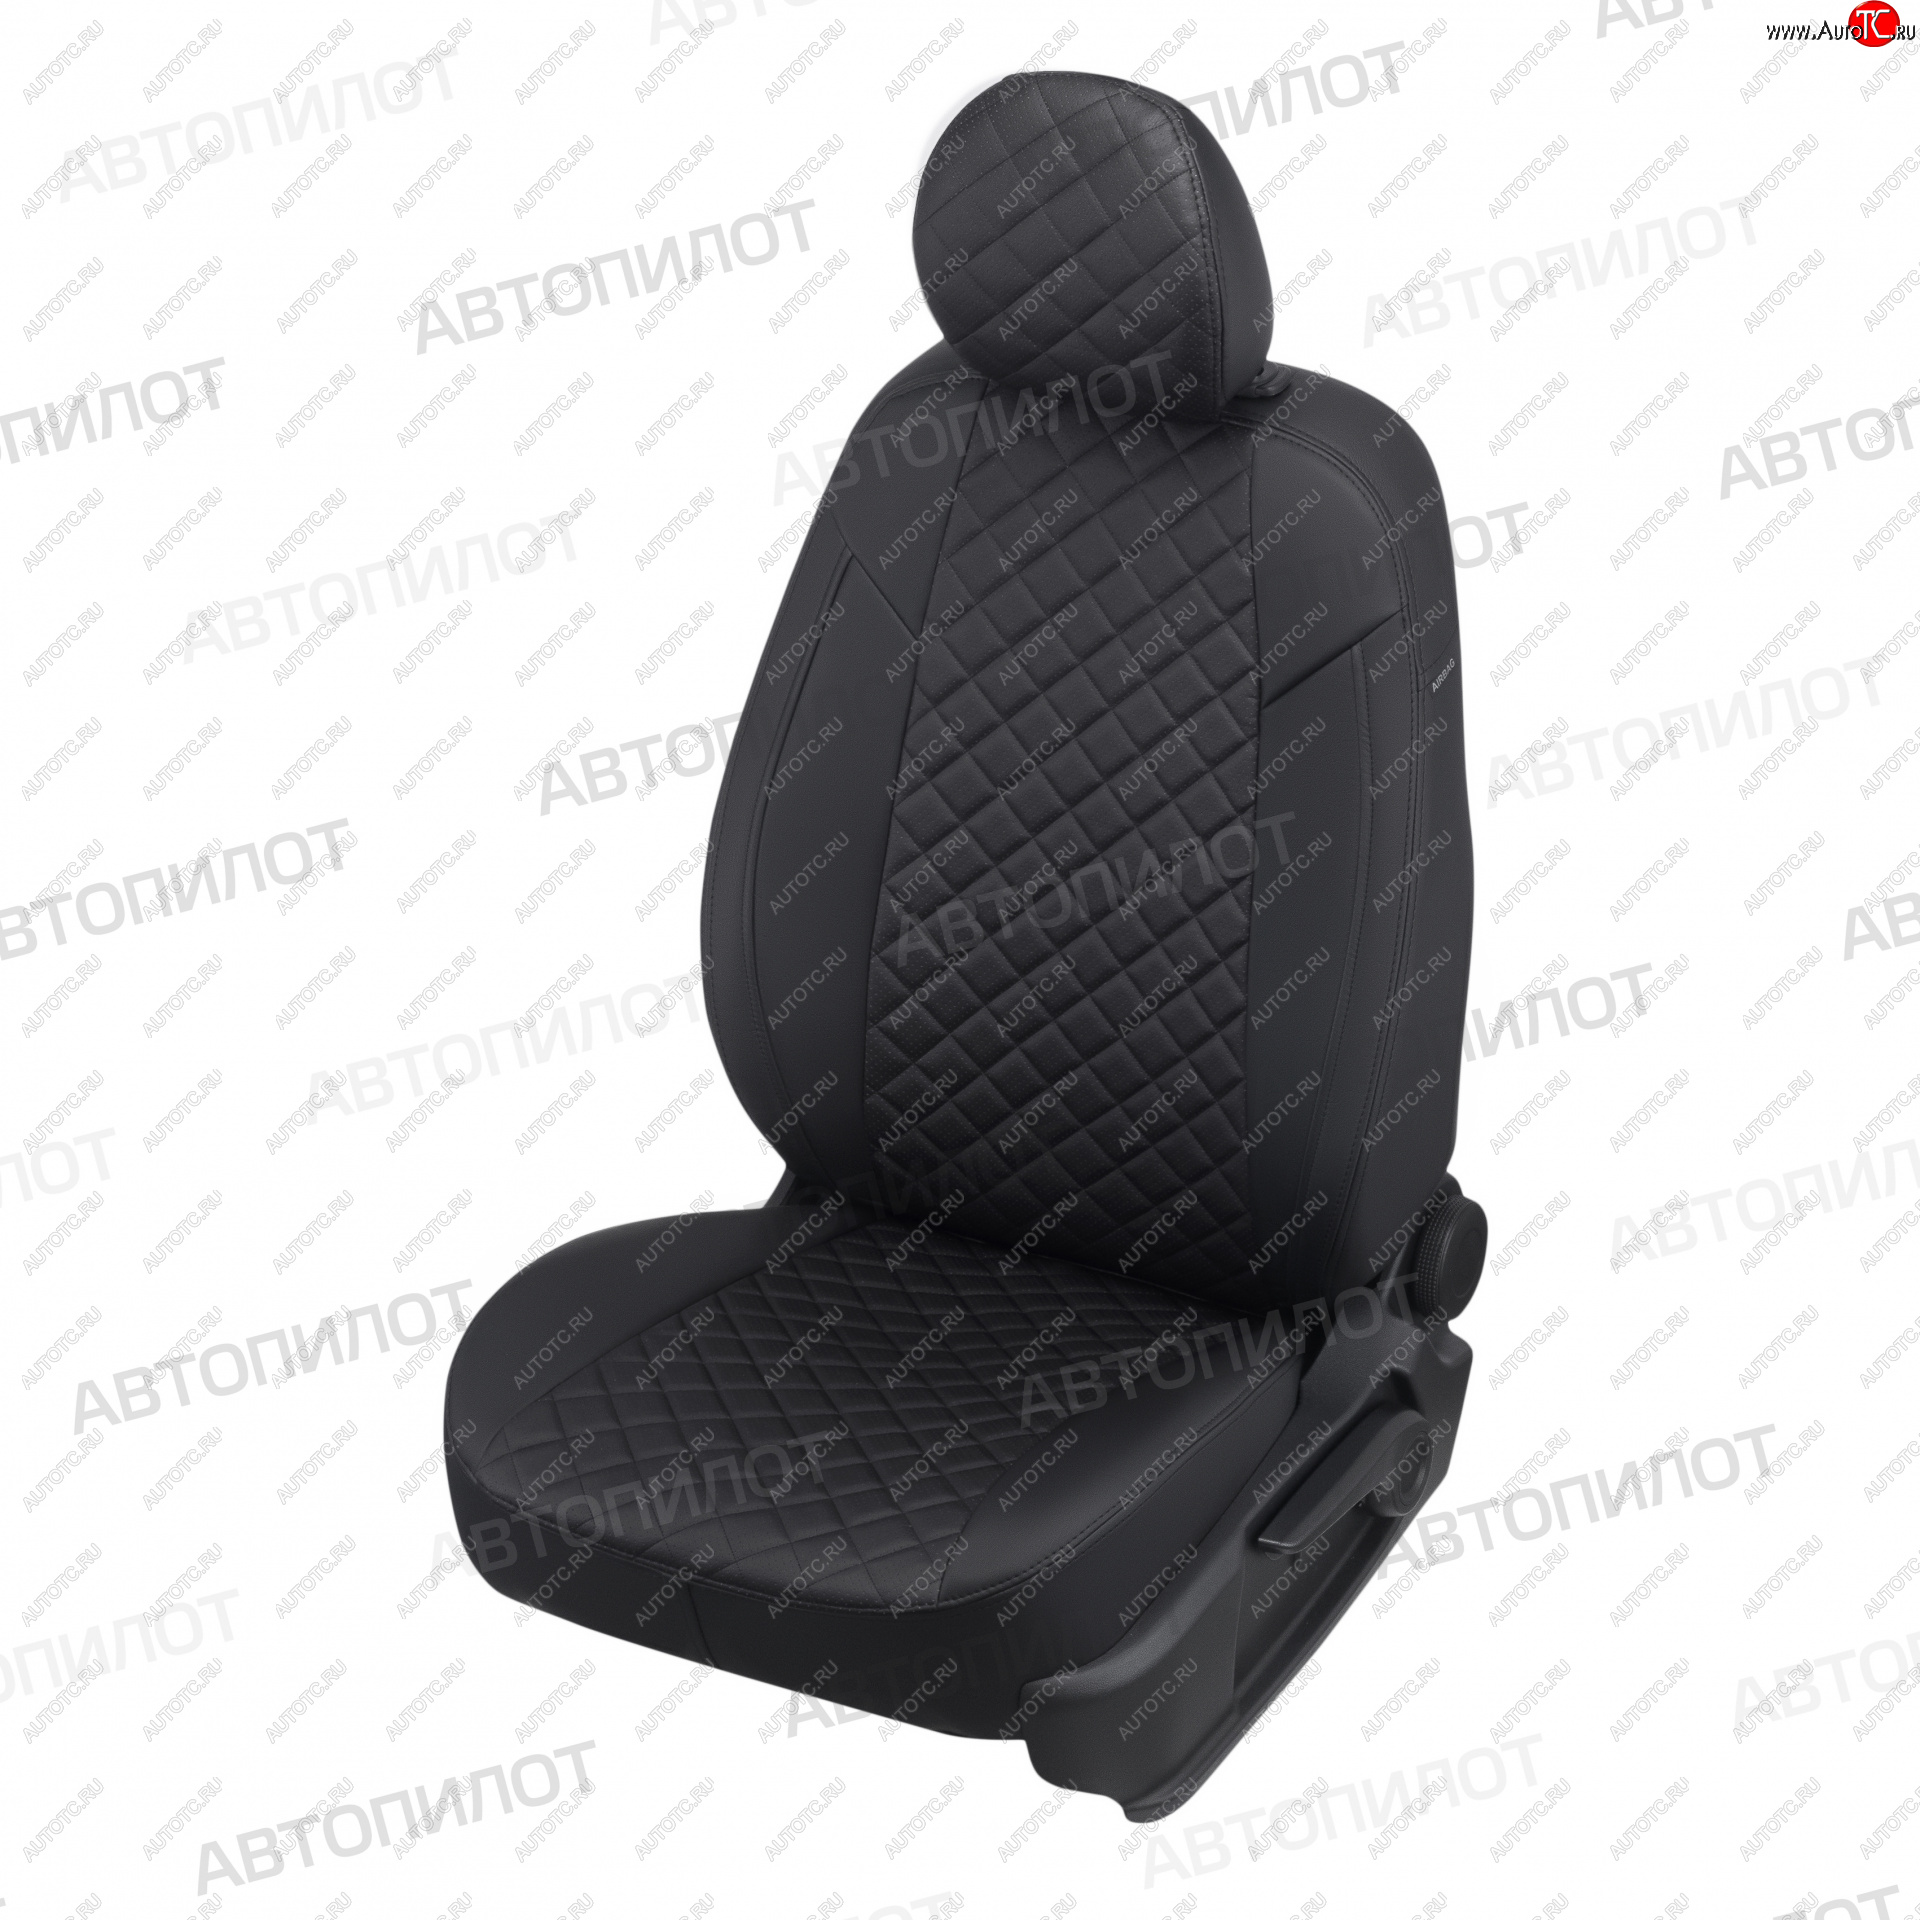 13 999 р. Чехлы сидений (экокожа, 50/50) Автопилот Ромб  KIA Sportage  1 JA (1993-2006) (черный)